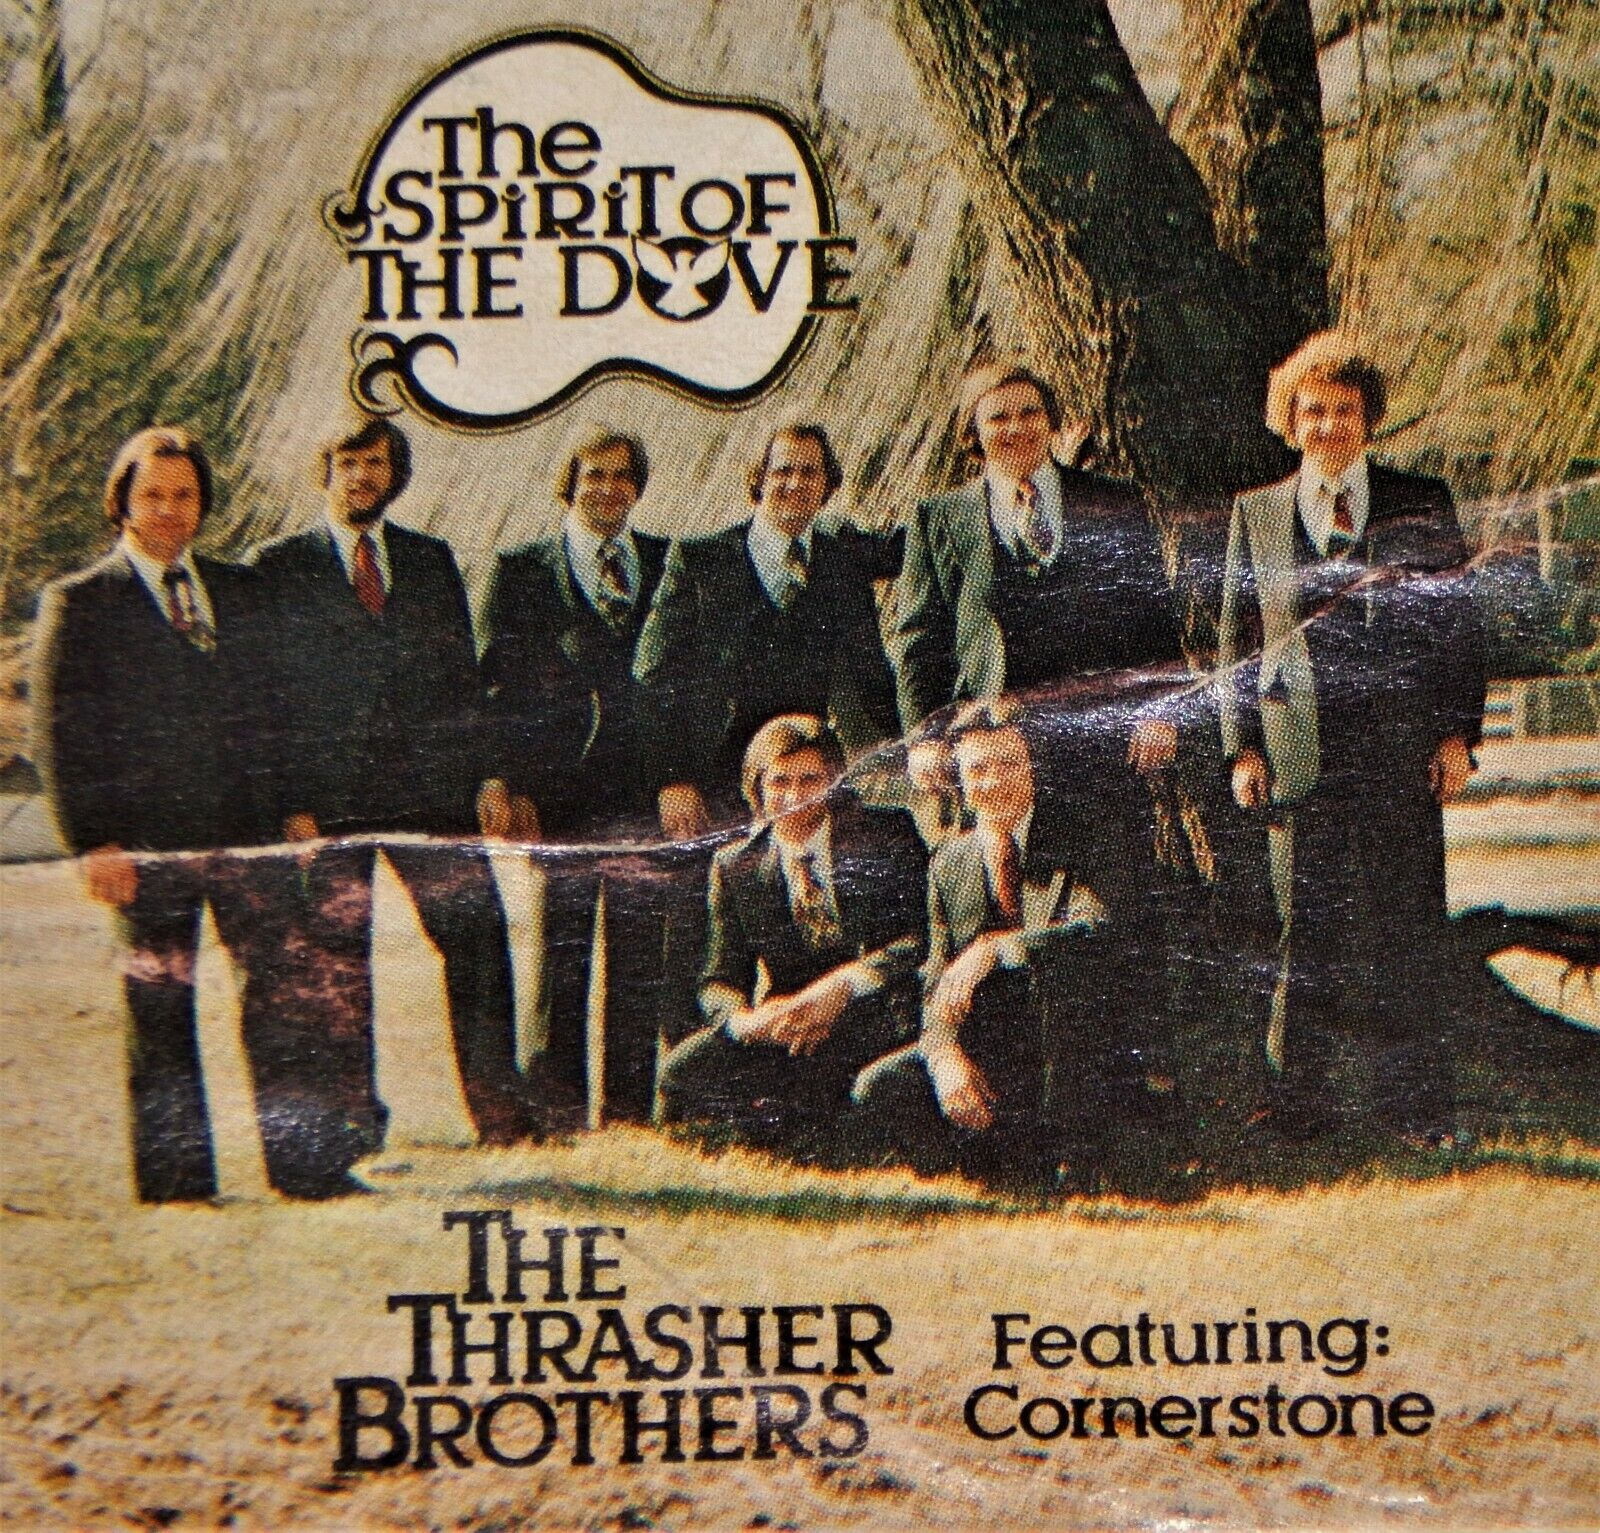 Vintage 8 Track-Tape, THE THRASHER BROTHERS: SPIRIT OF THE DOVE, 1977,Gospel,Pop